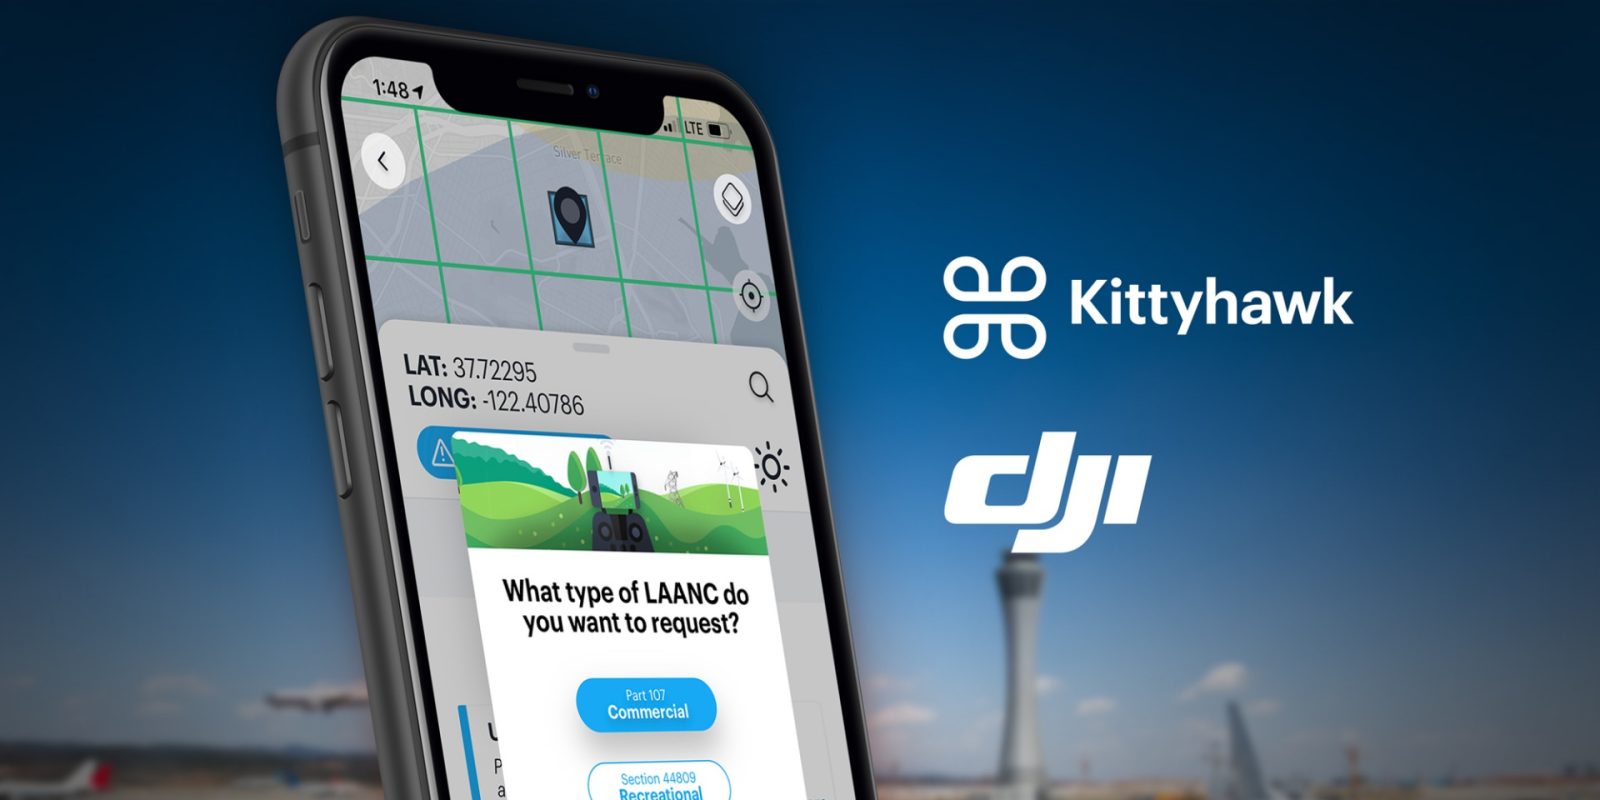 DJI recommends free Kittyhawk LAANC service for recreational pilots